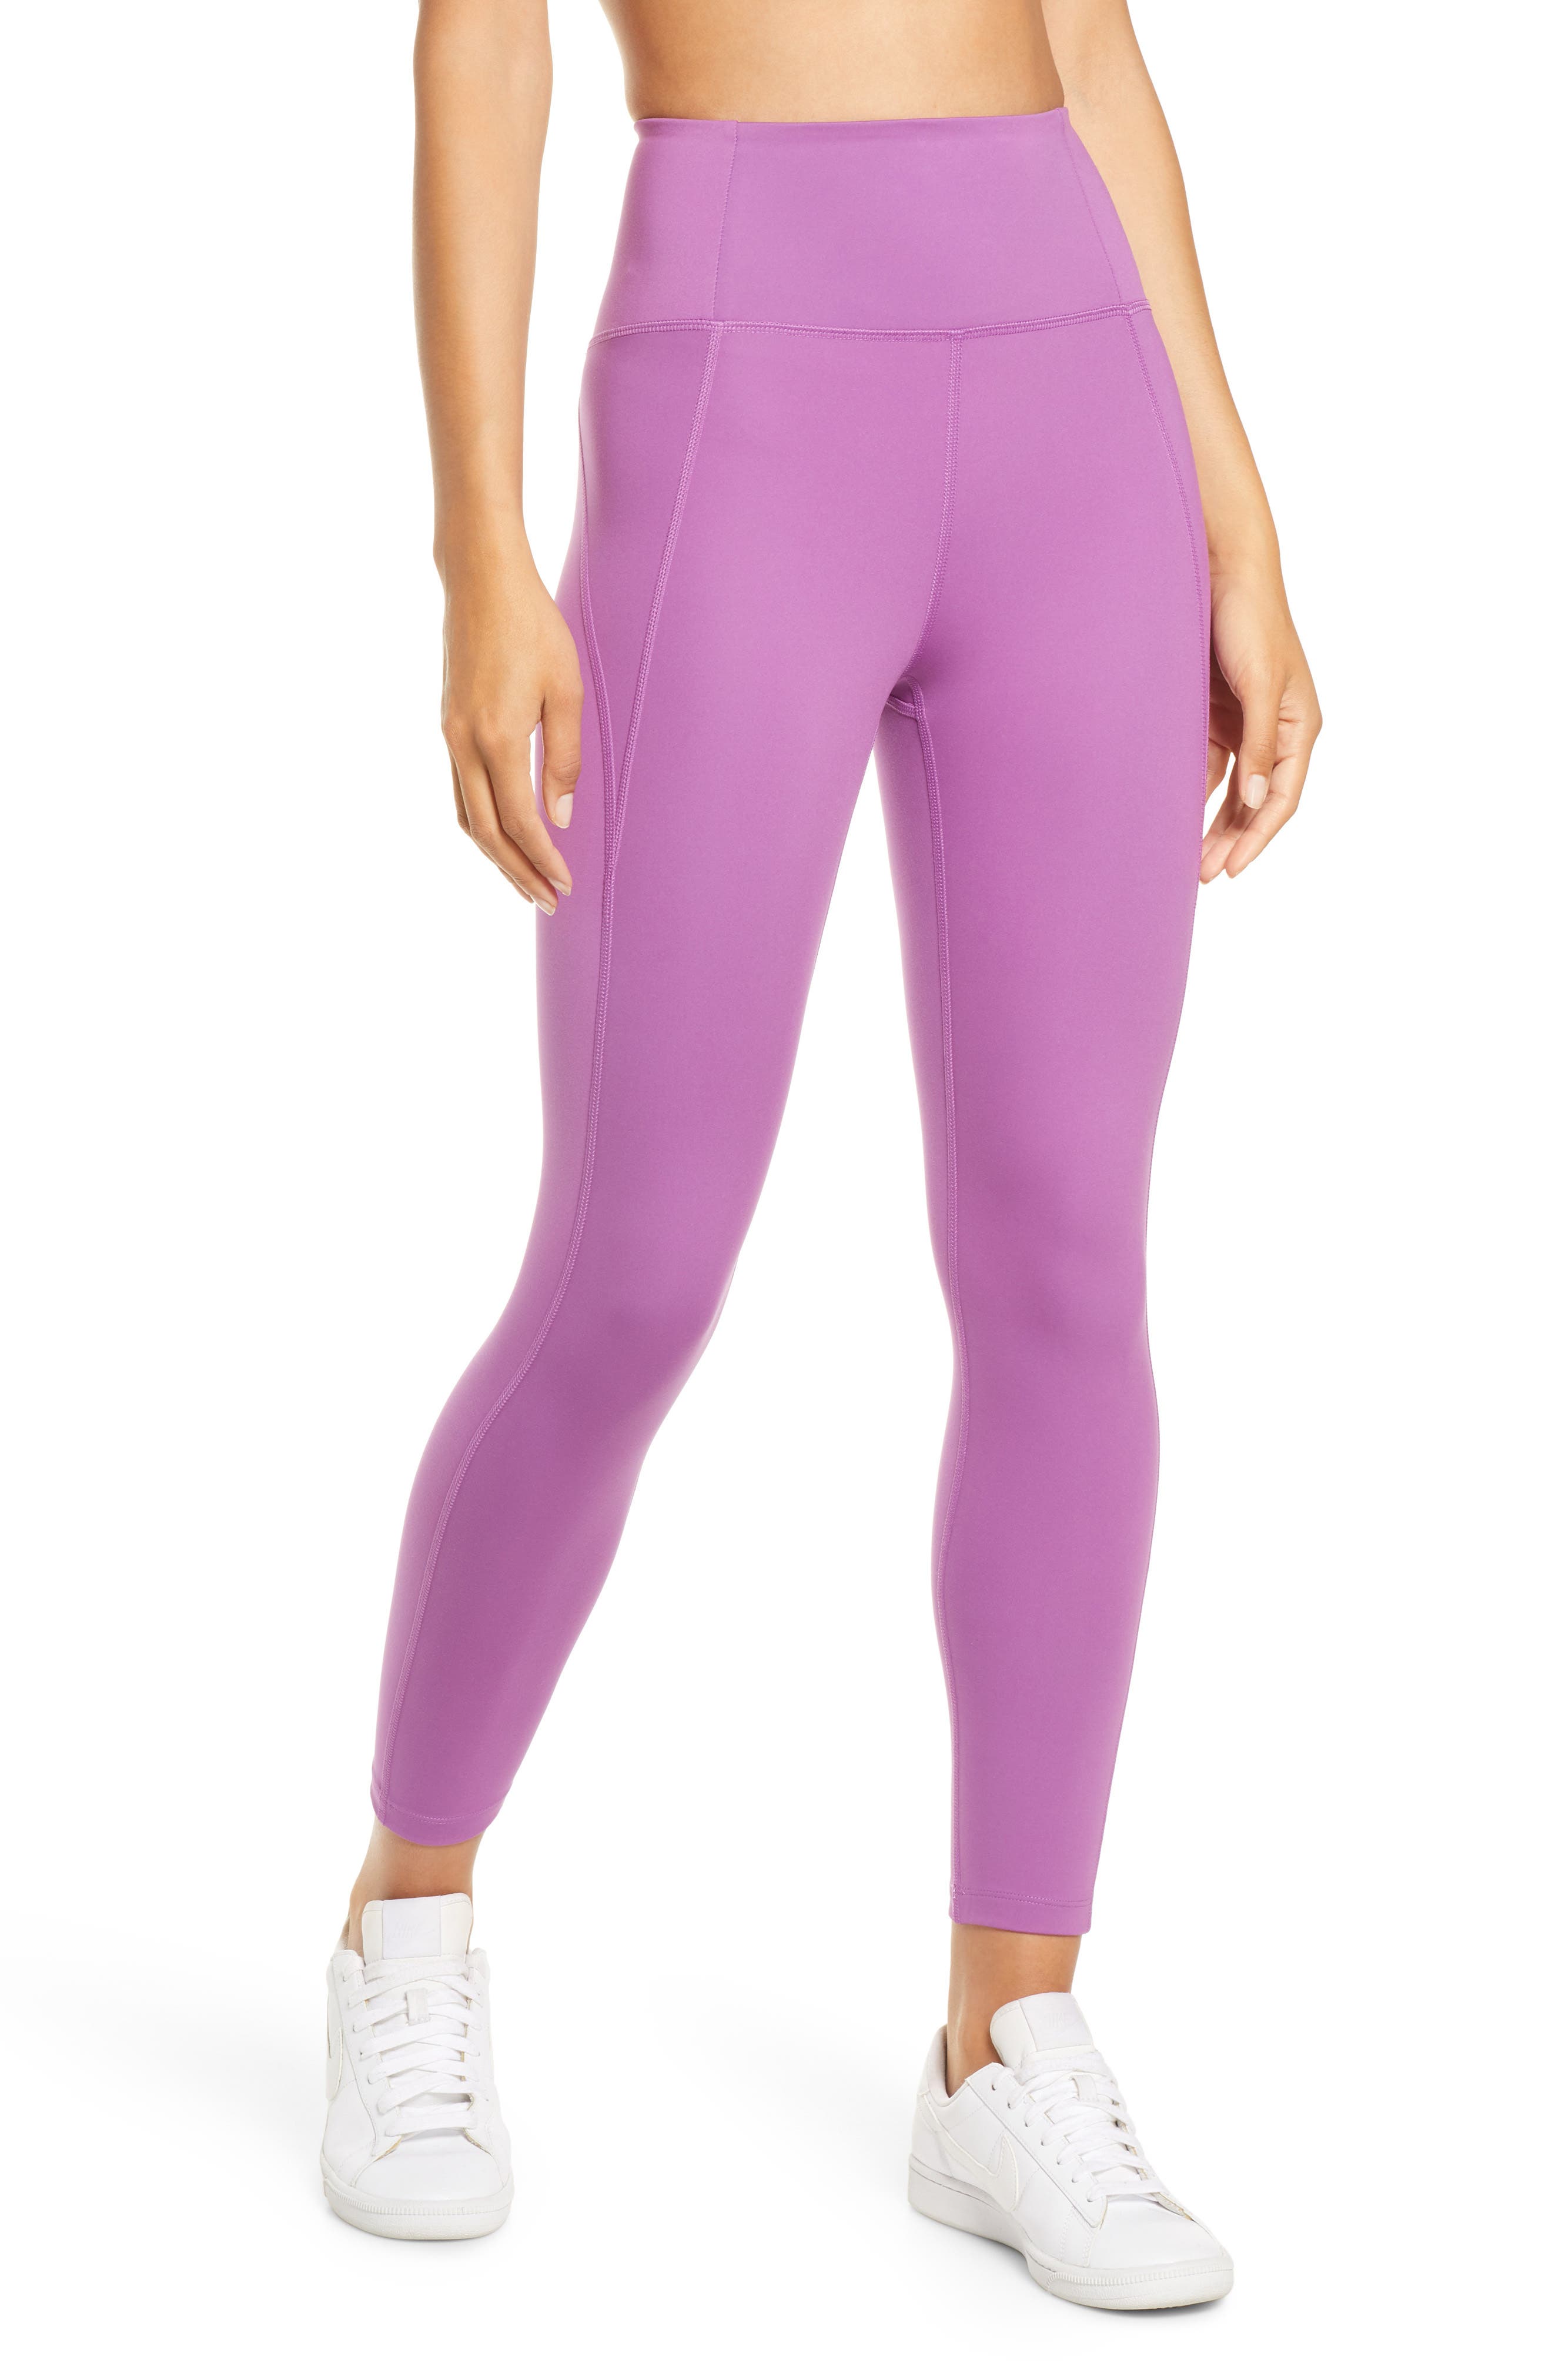 purple workout pants